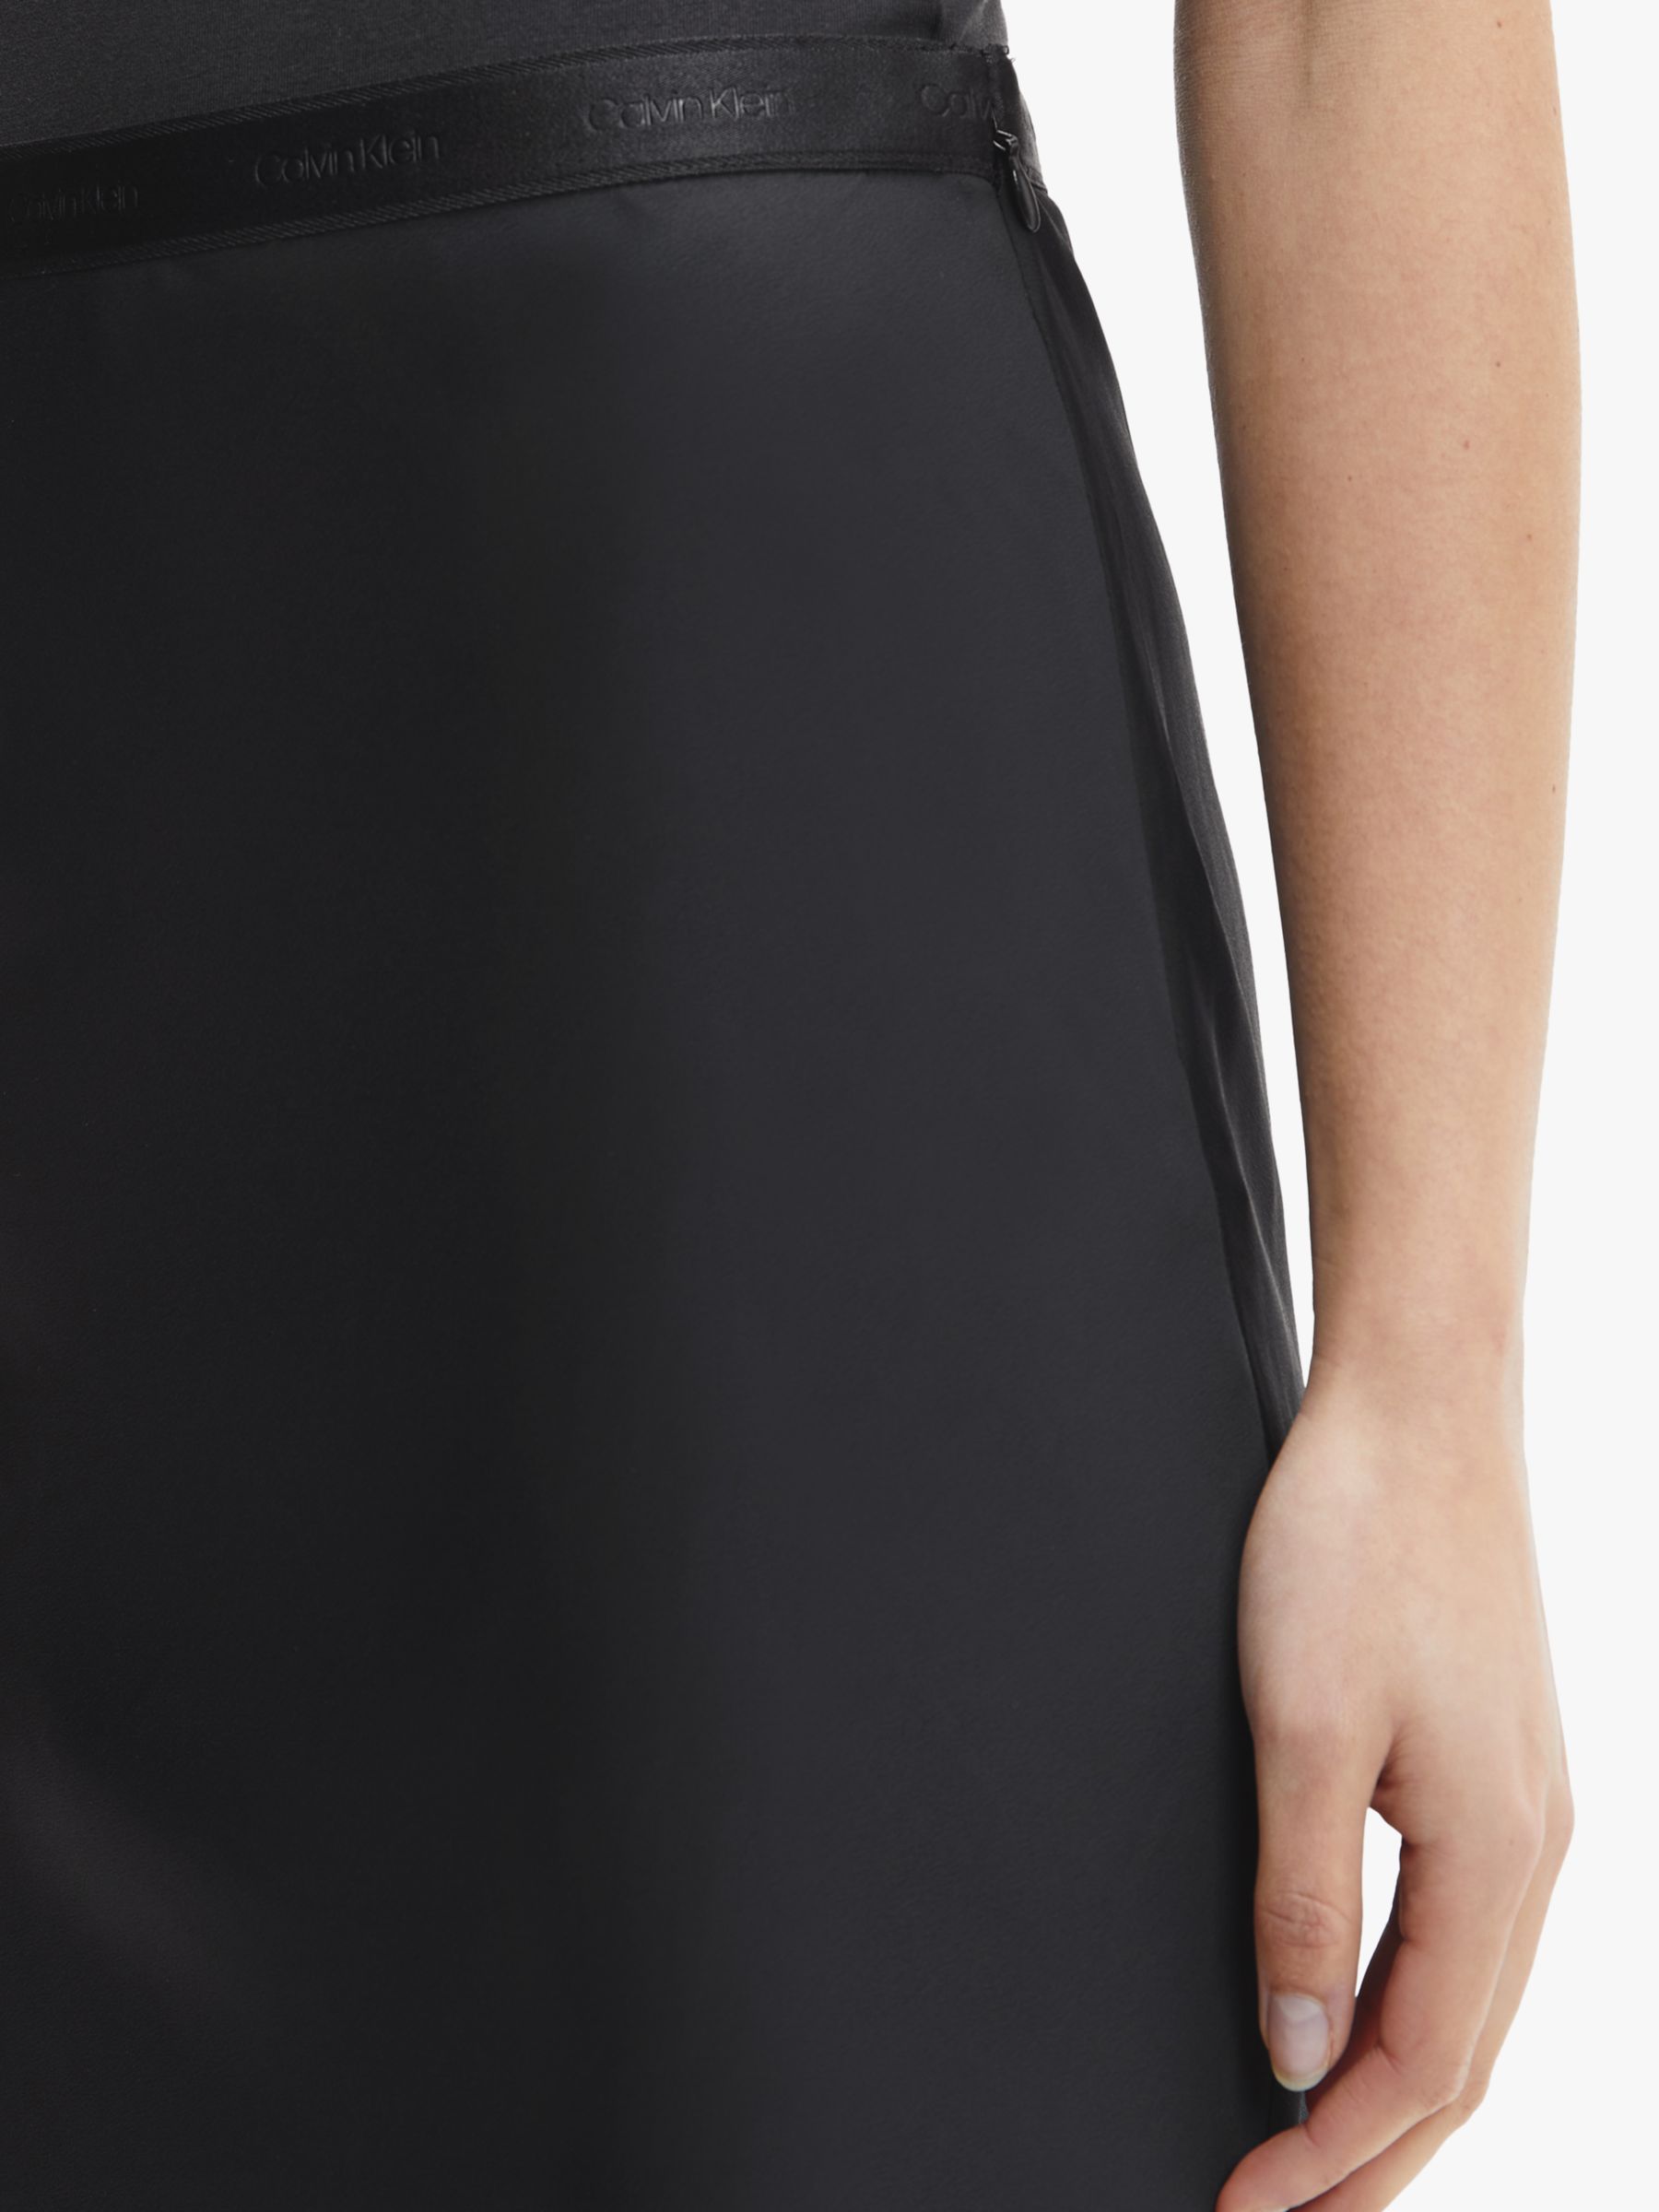 Cut Skirt, Calvin Midi Klein at & John Partners Lewis Bias Black